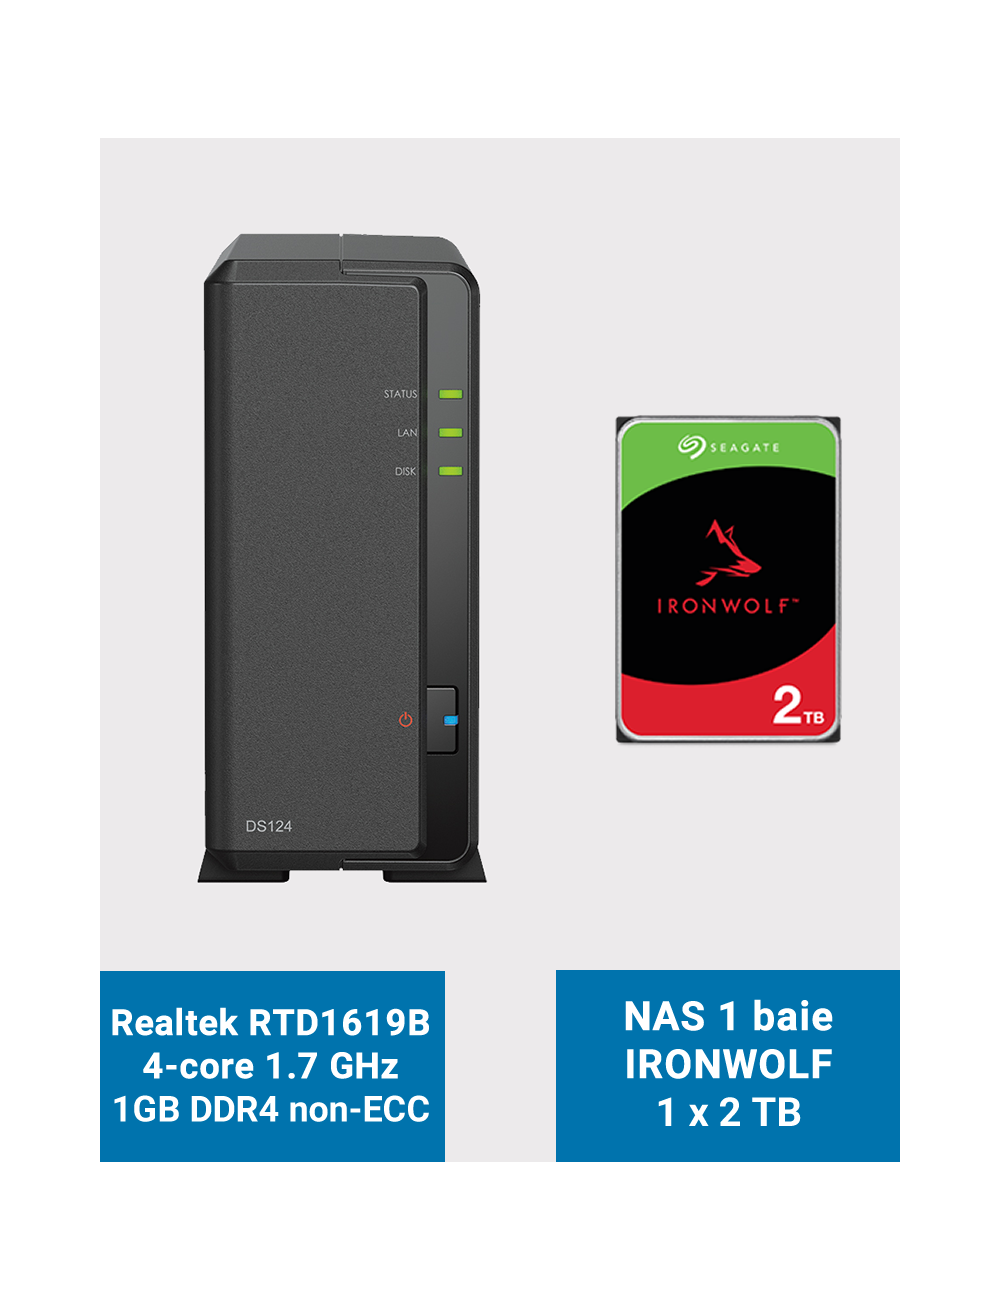 Synology DiskStation DS124 NAS Server IRONWOLF 2TB (1x2TB)